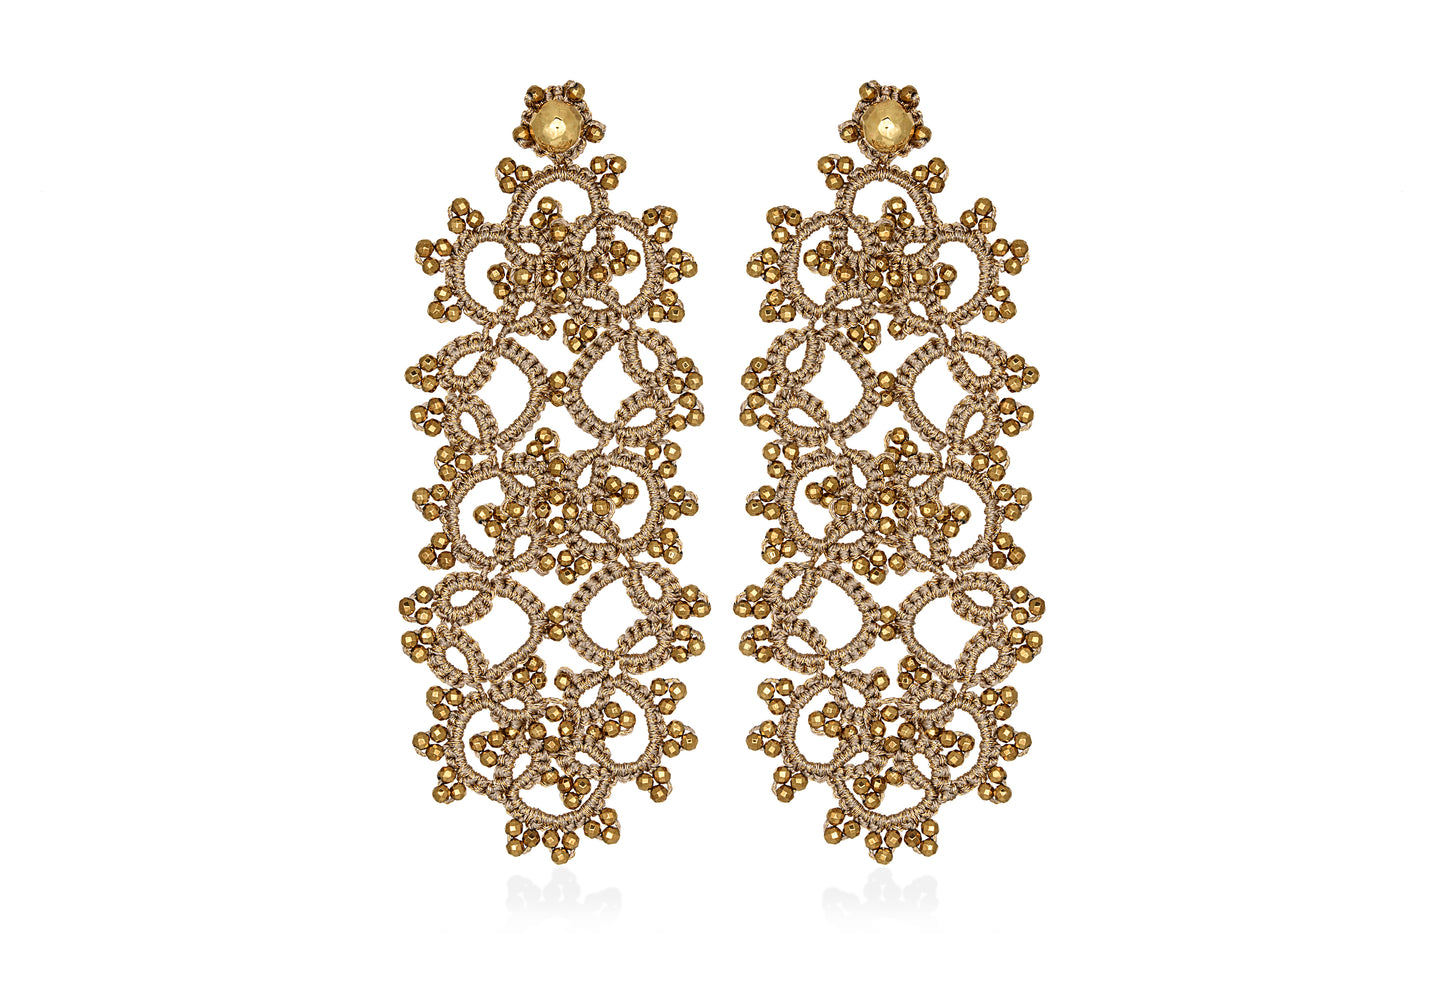 Art Deco large lace earrings, gold